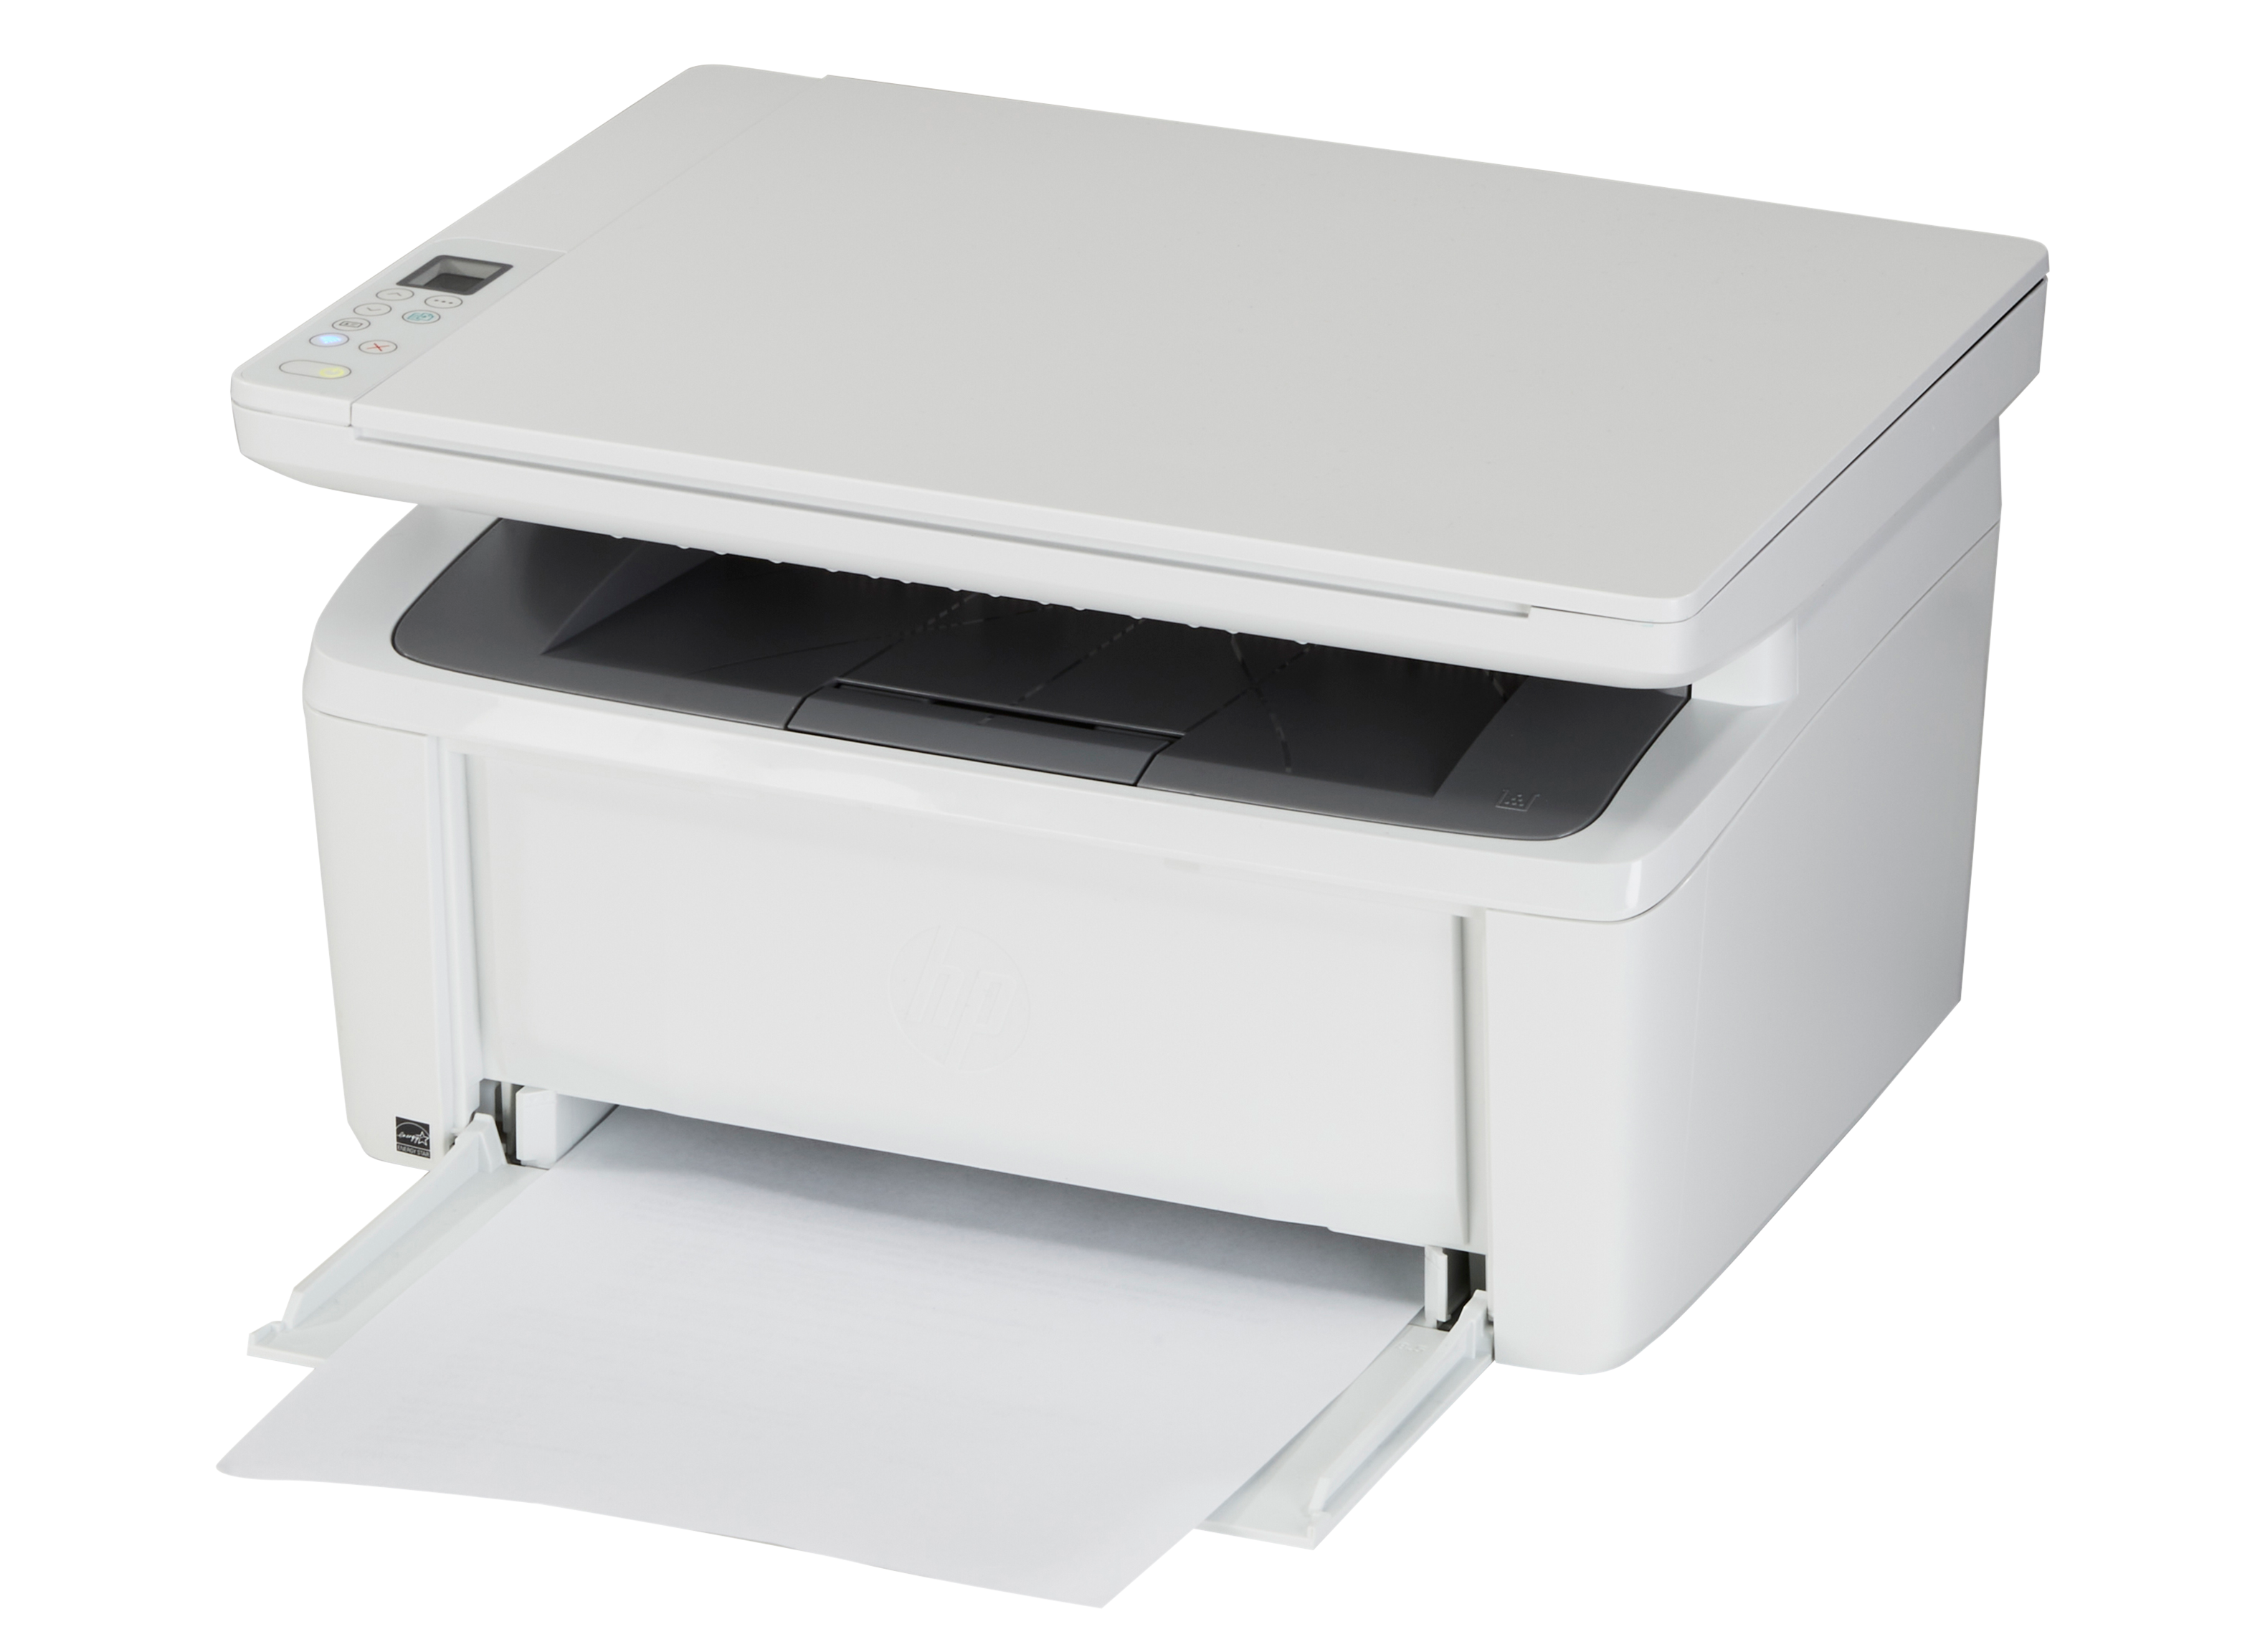 HP LaserJet MFP M140w Laser Printer, Black And White Mobile Print, Copy,  Scan Up